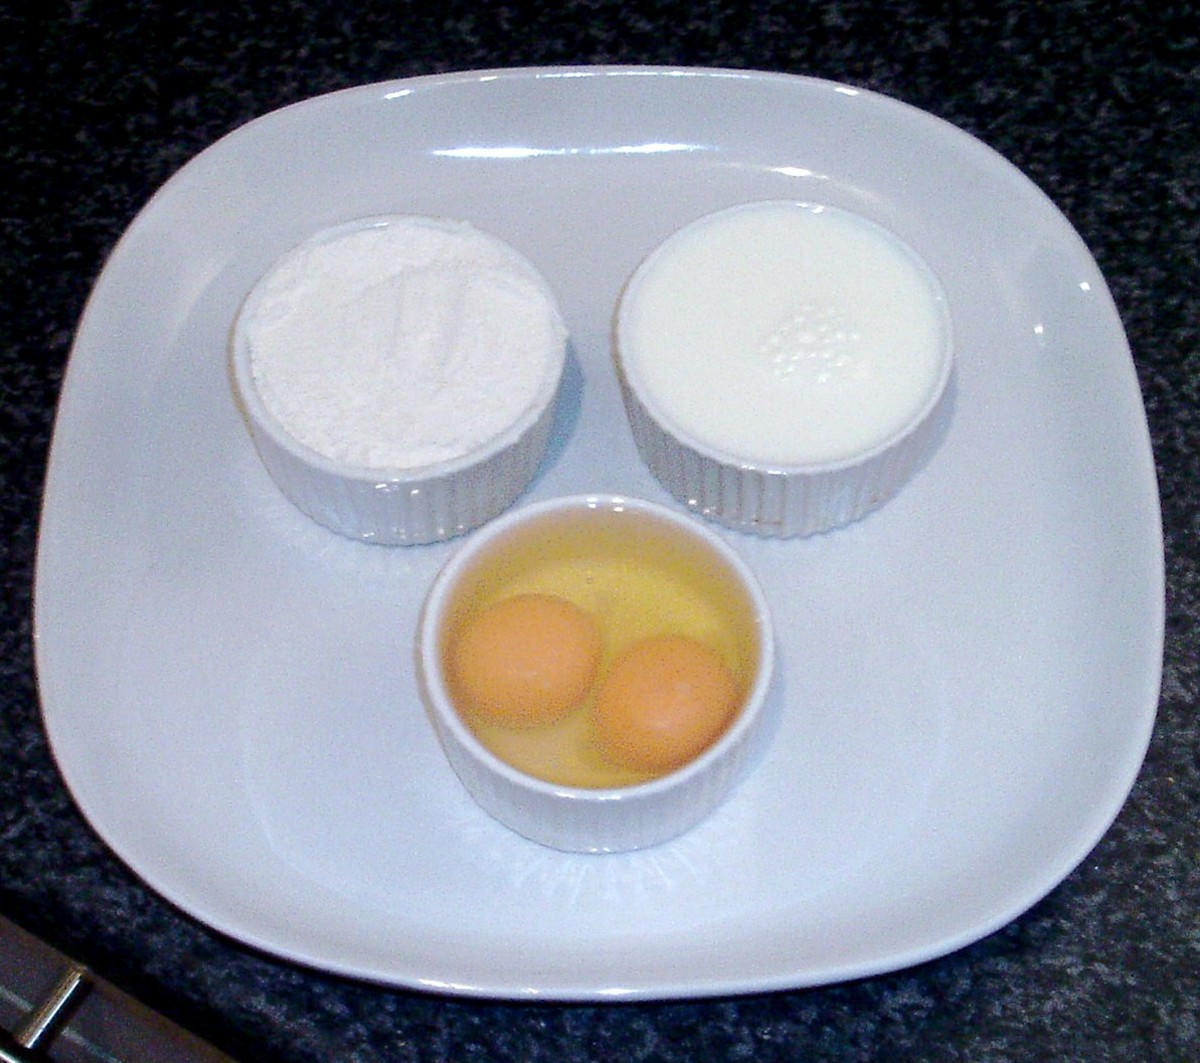 Yorkshire pudding batter ingredients